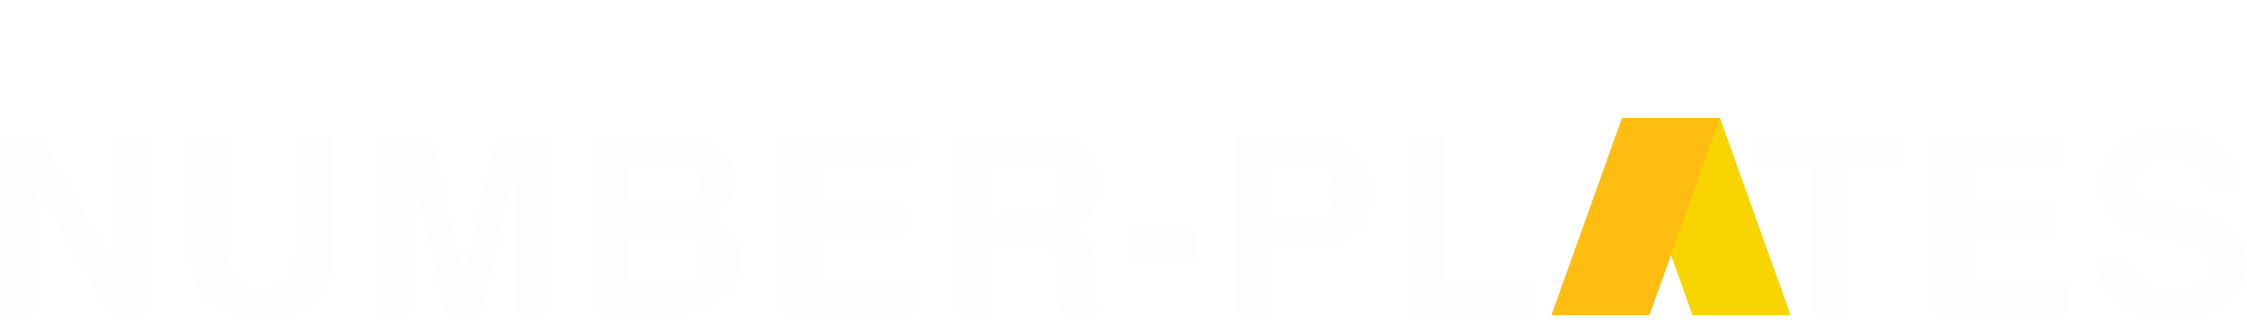 PPP logo.